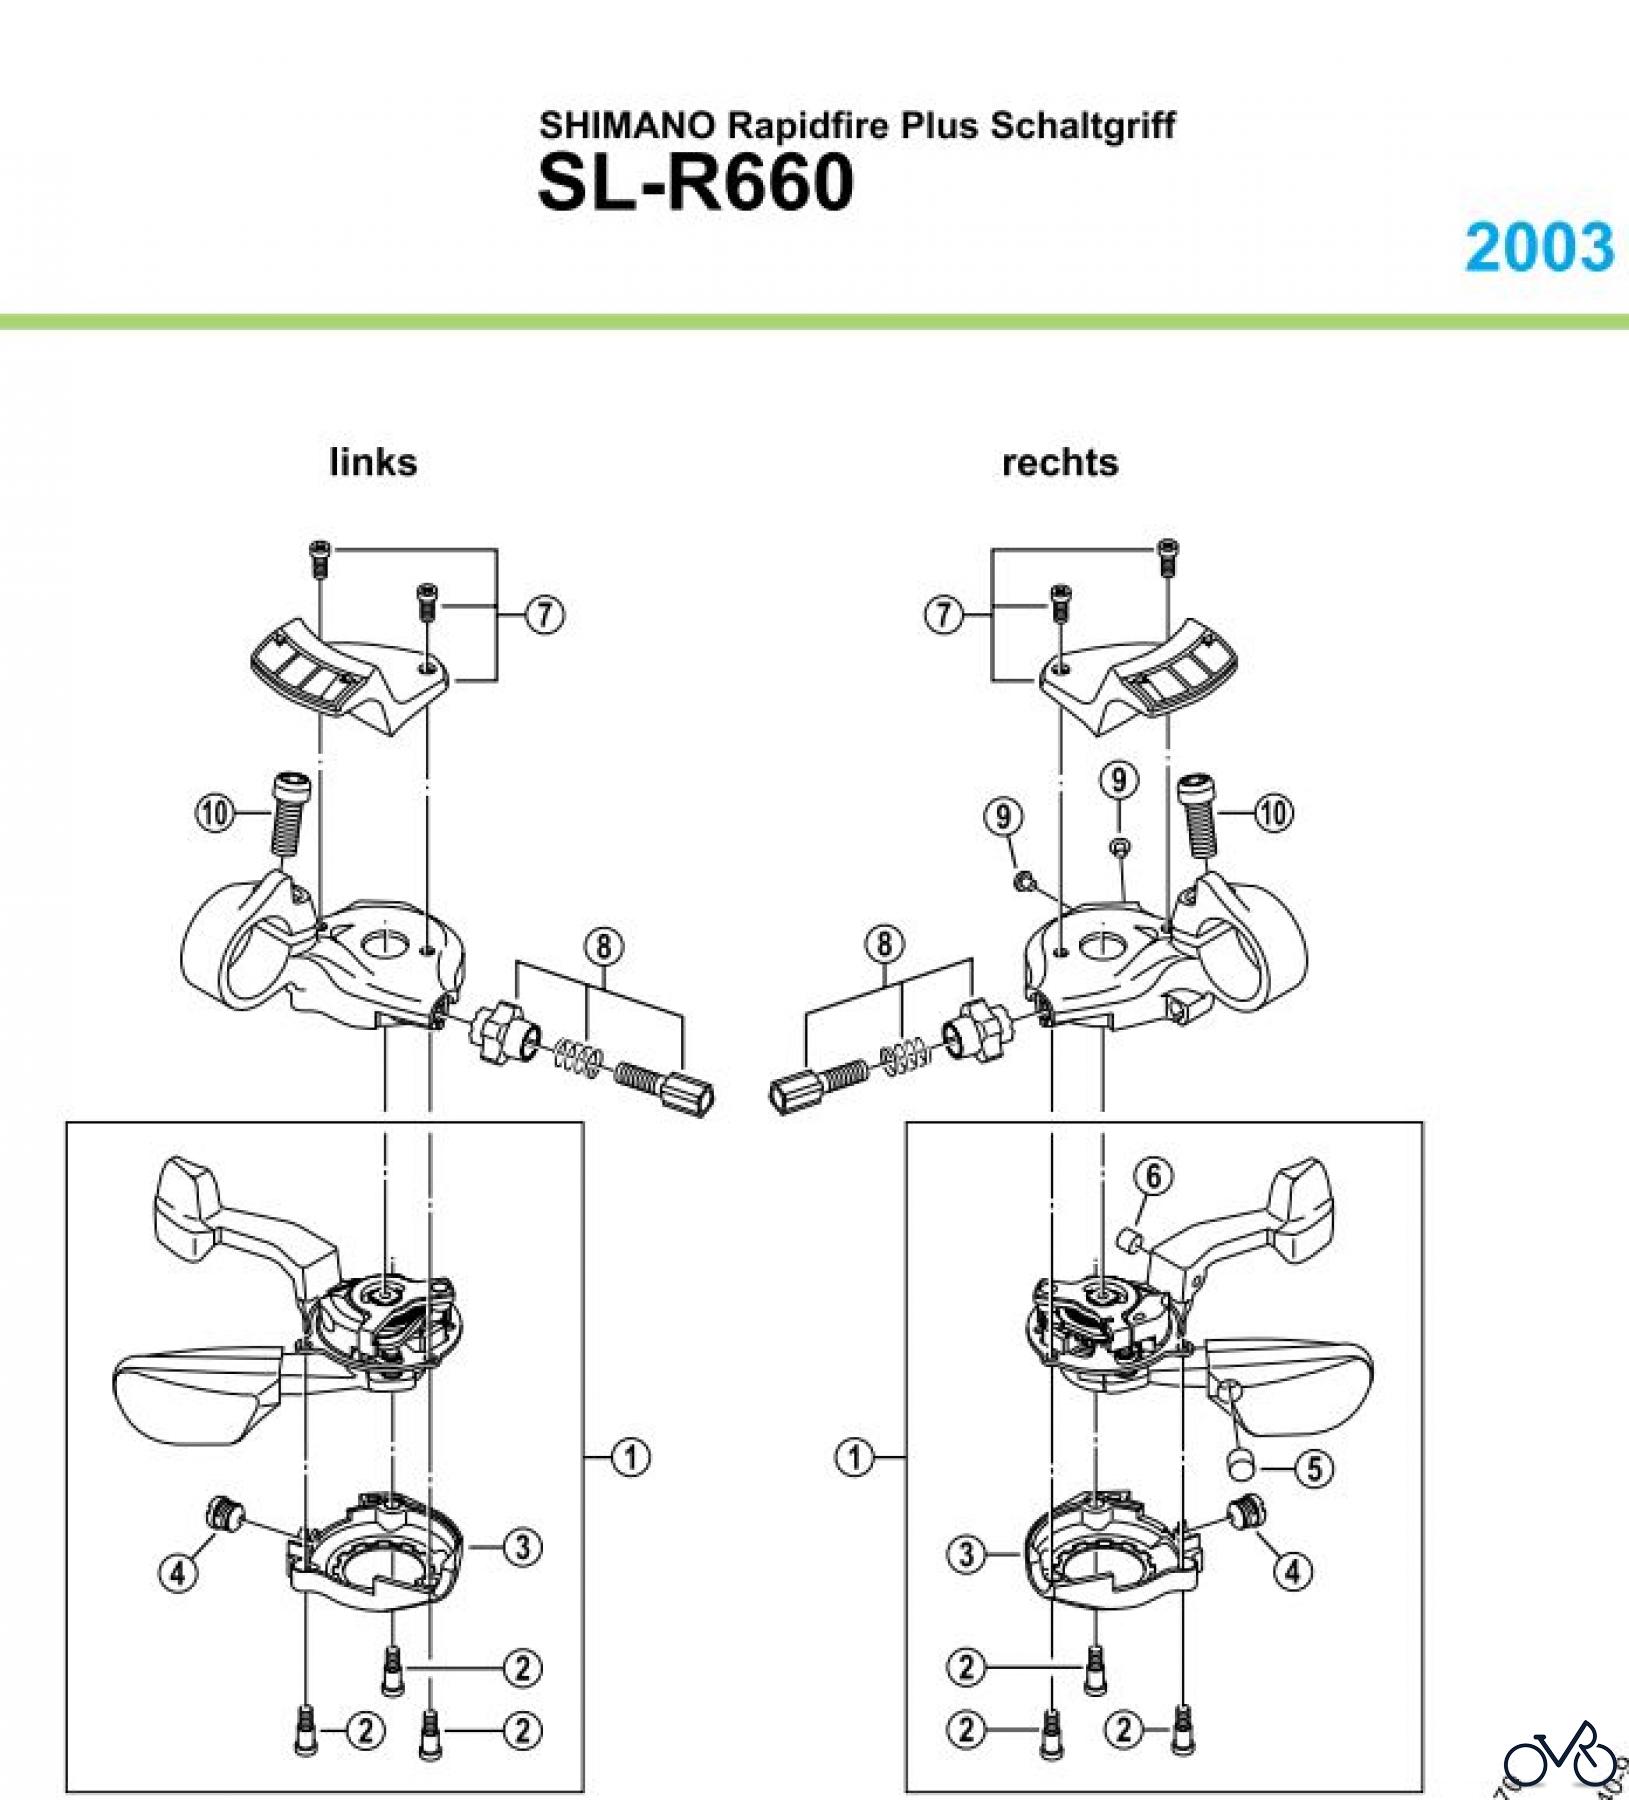  Shimano SL Shift Lever - Schalthebel SL-R660, 2003 Rapidfire Plus Schaltgriff